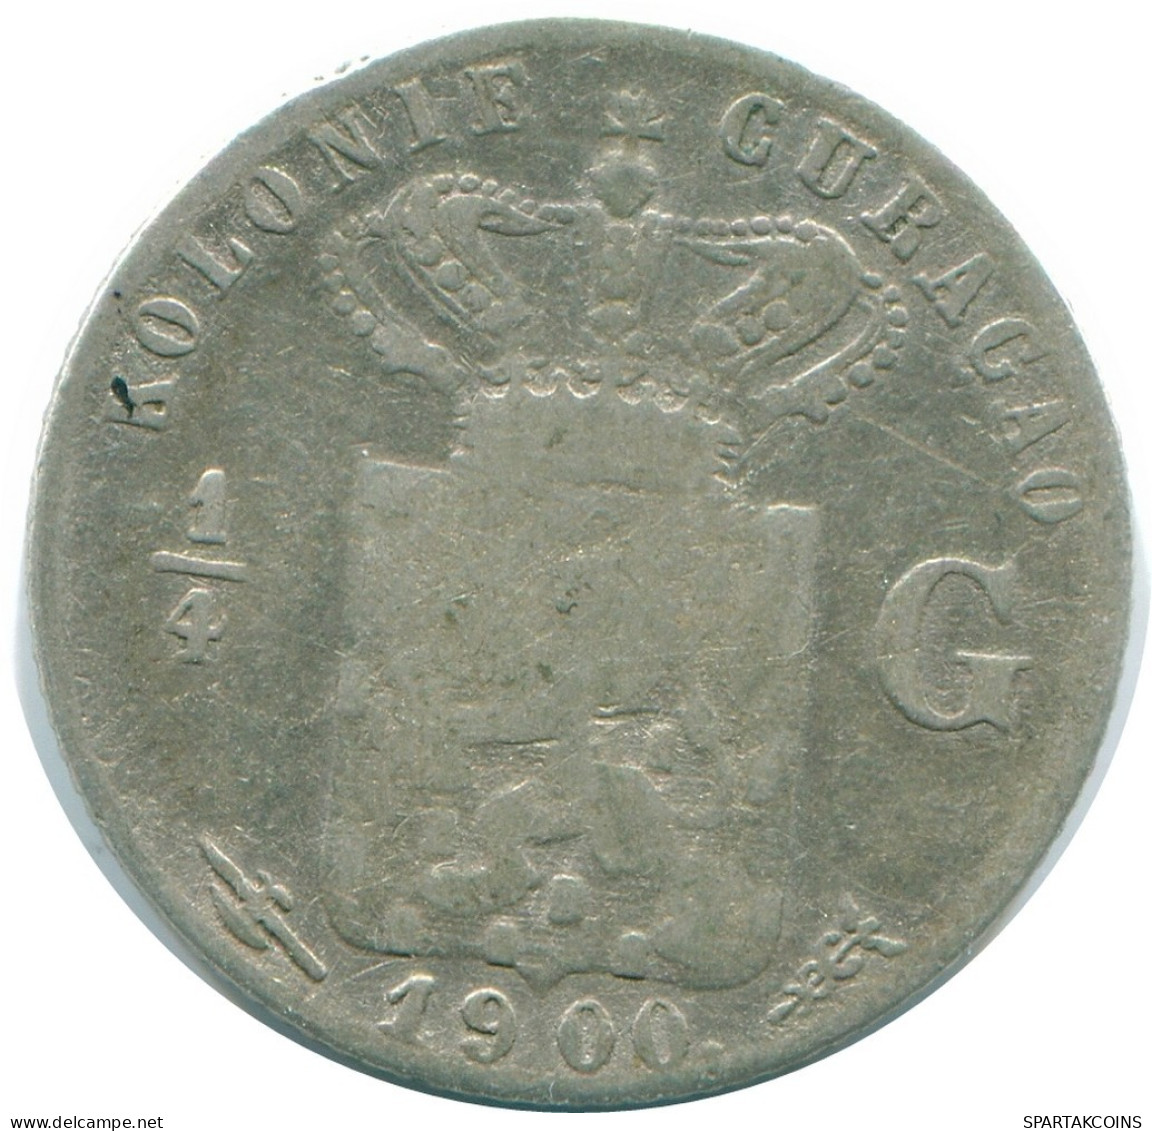 1/4 GULDEN 1900 CURACAO Netherlands SILVER Colonial Coin #NL10446.4.U.A - Curacao